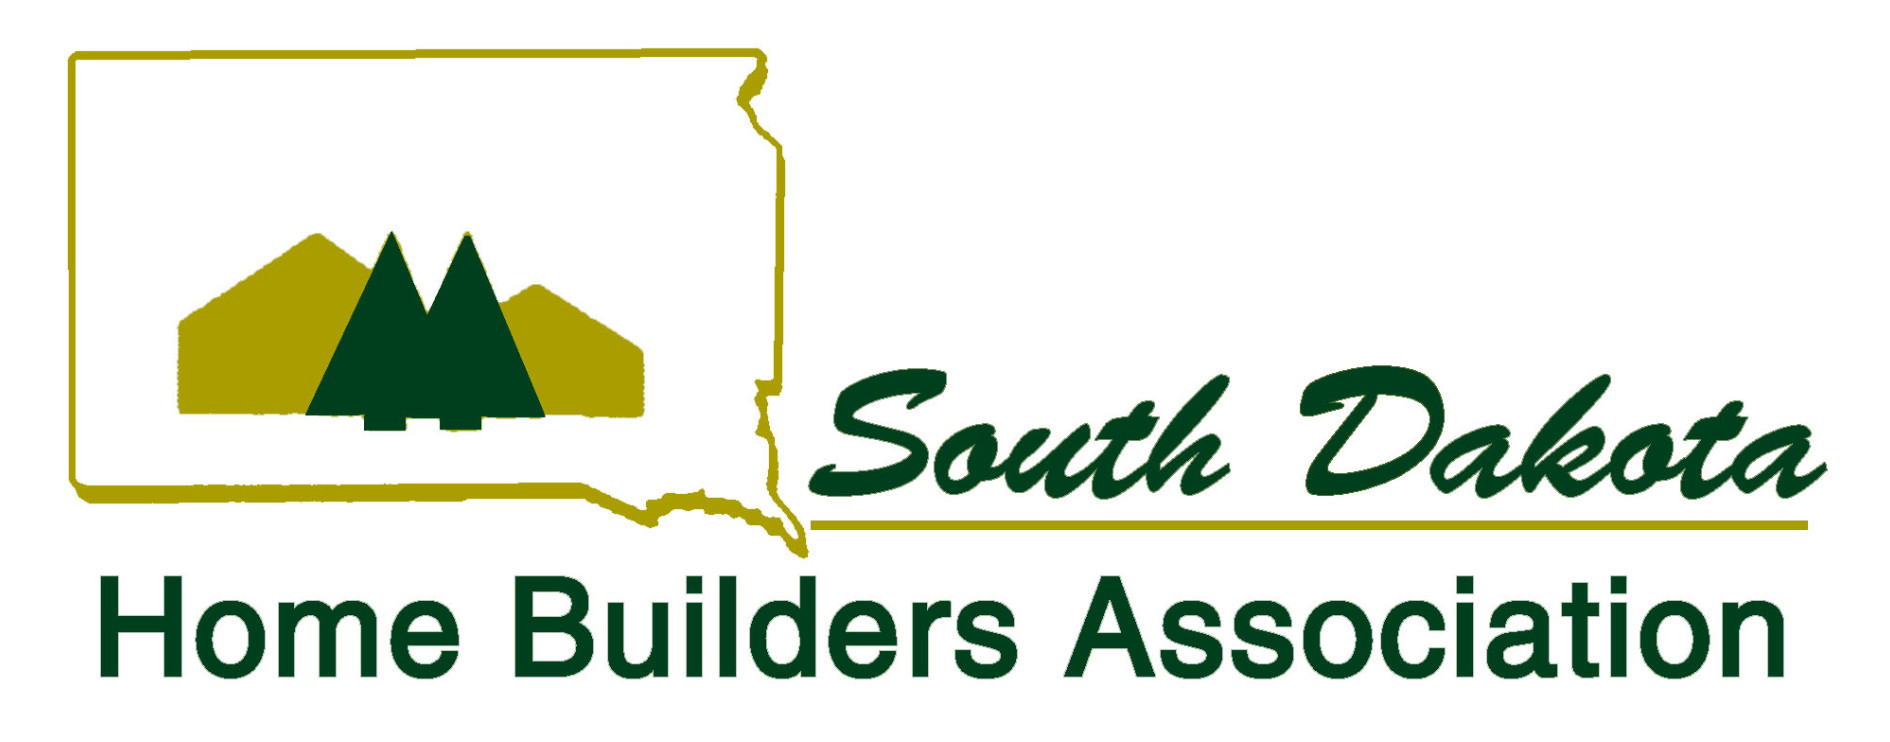 SD Home Builders Association